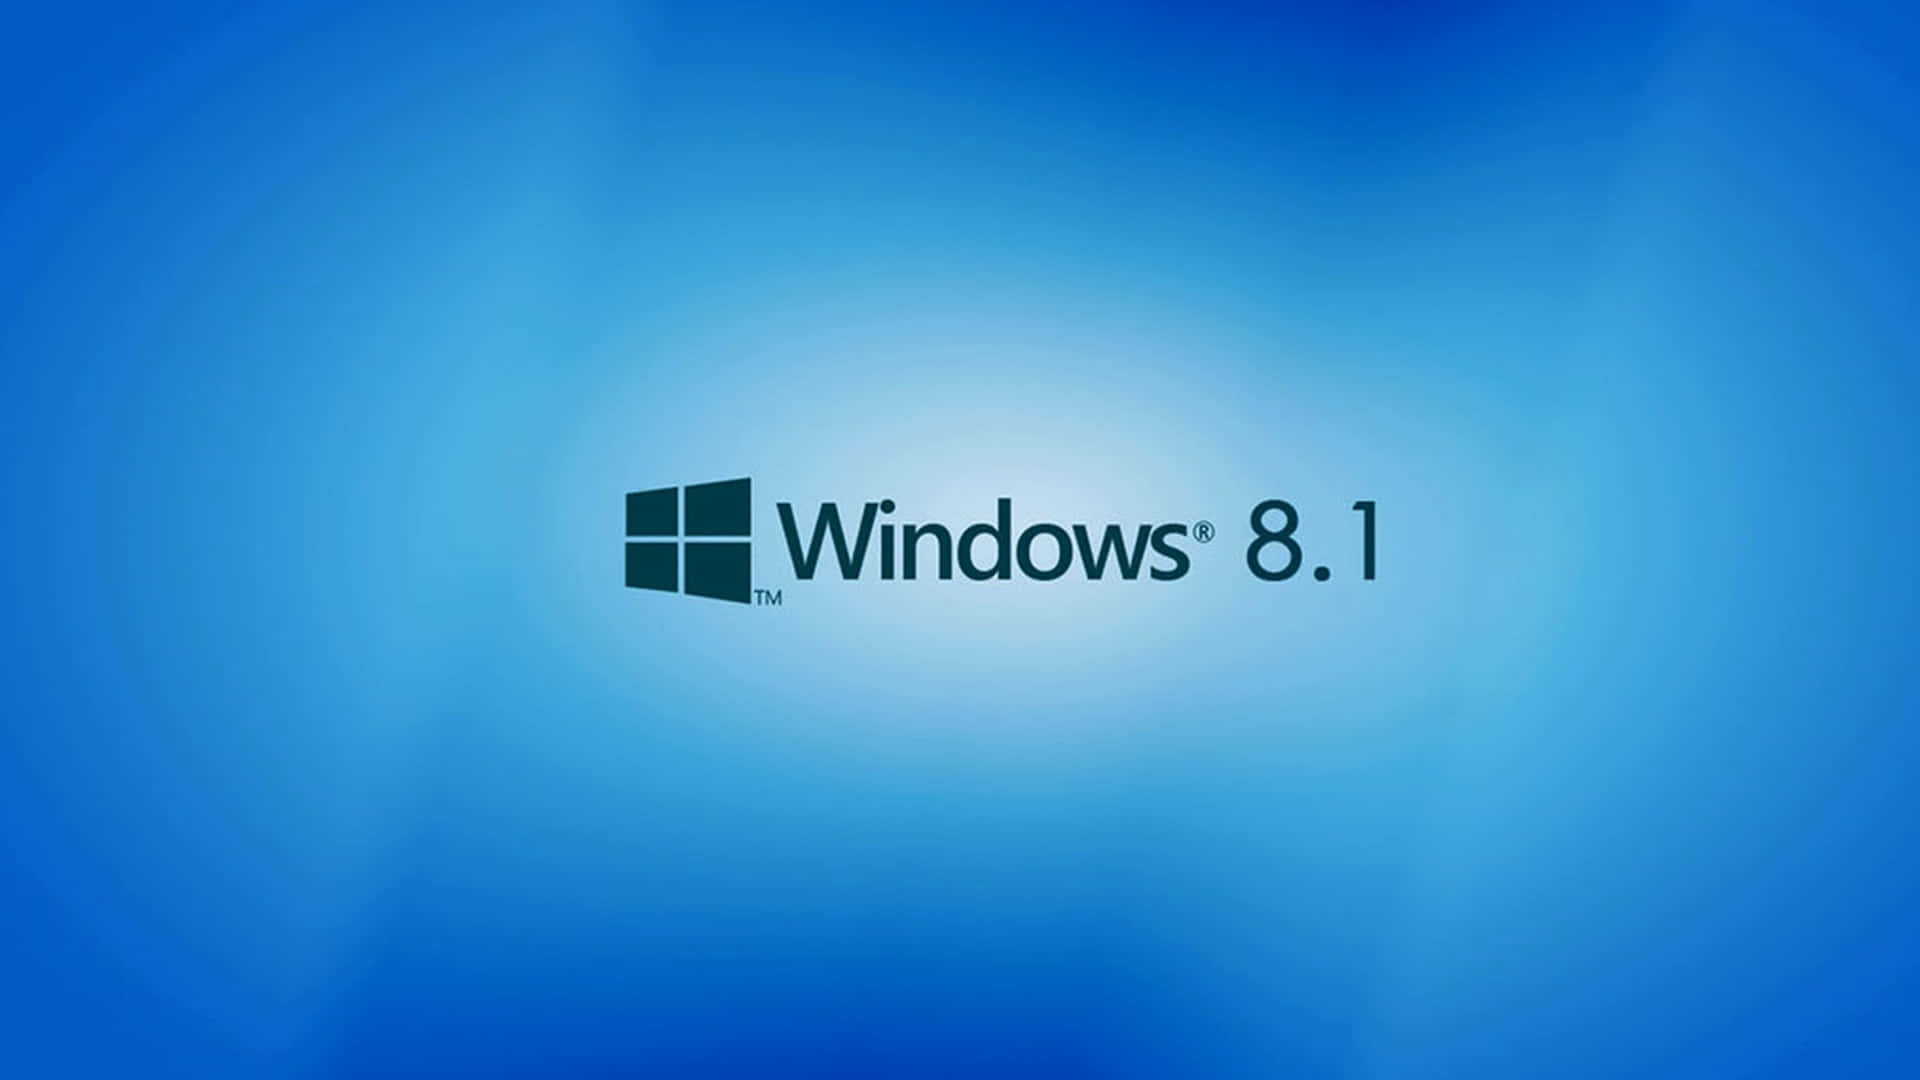 Classic Blue Windows 8.1 Background